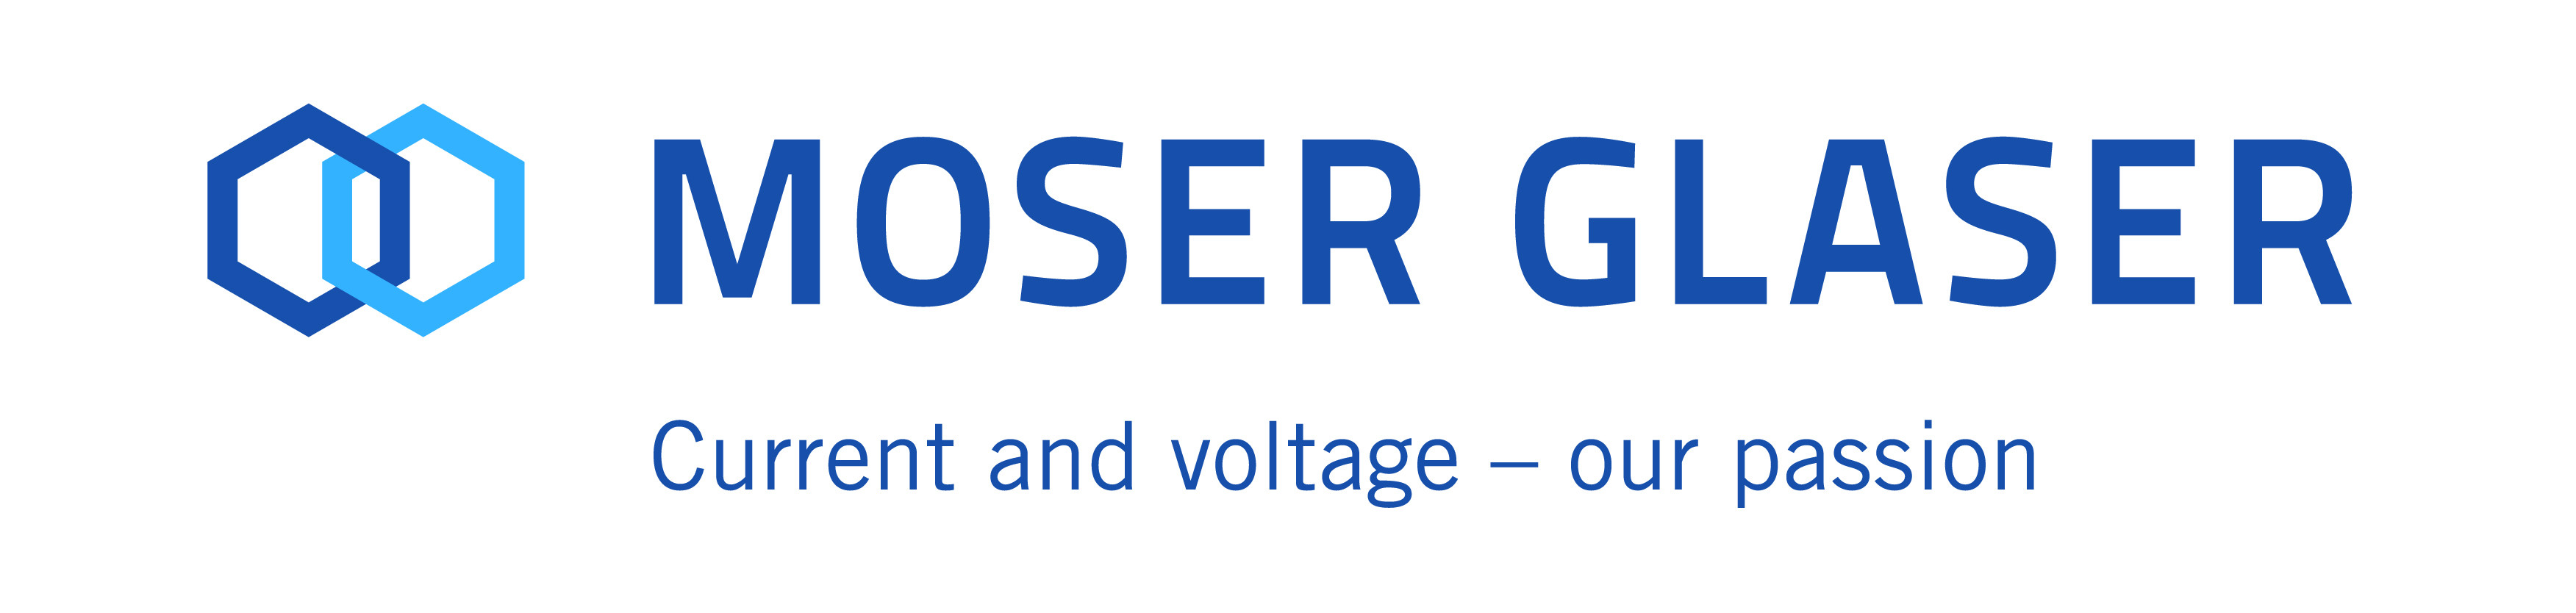 MGC MOSER-GLASER AG